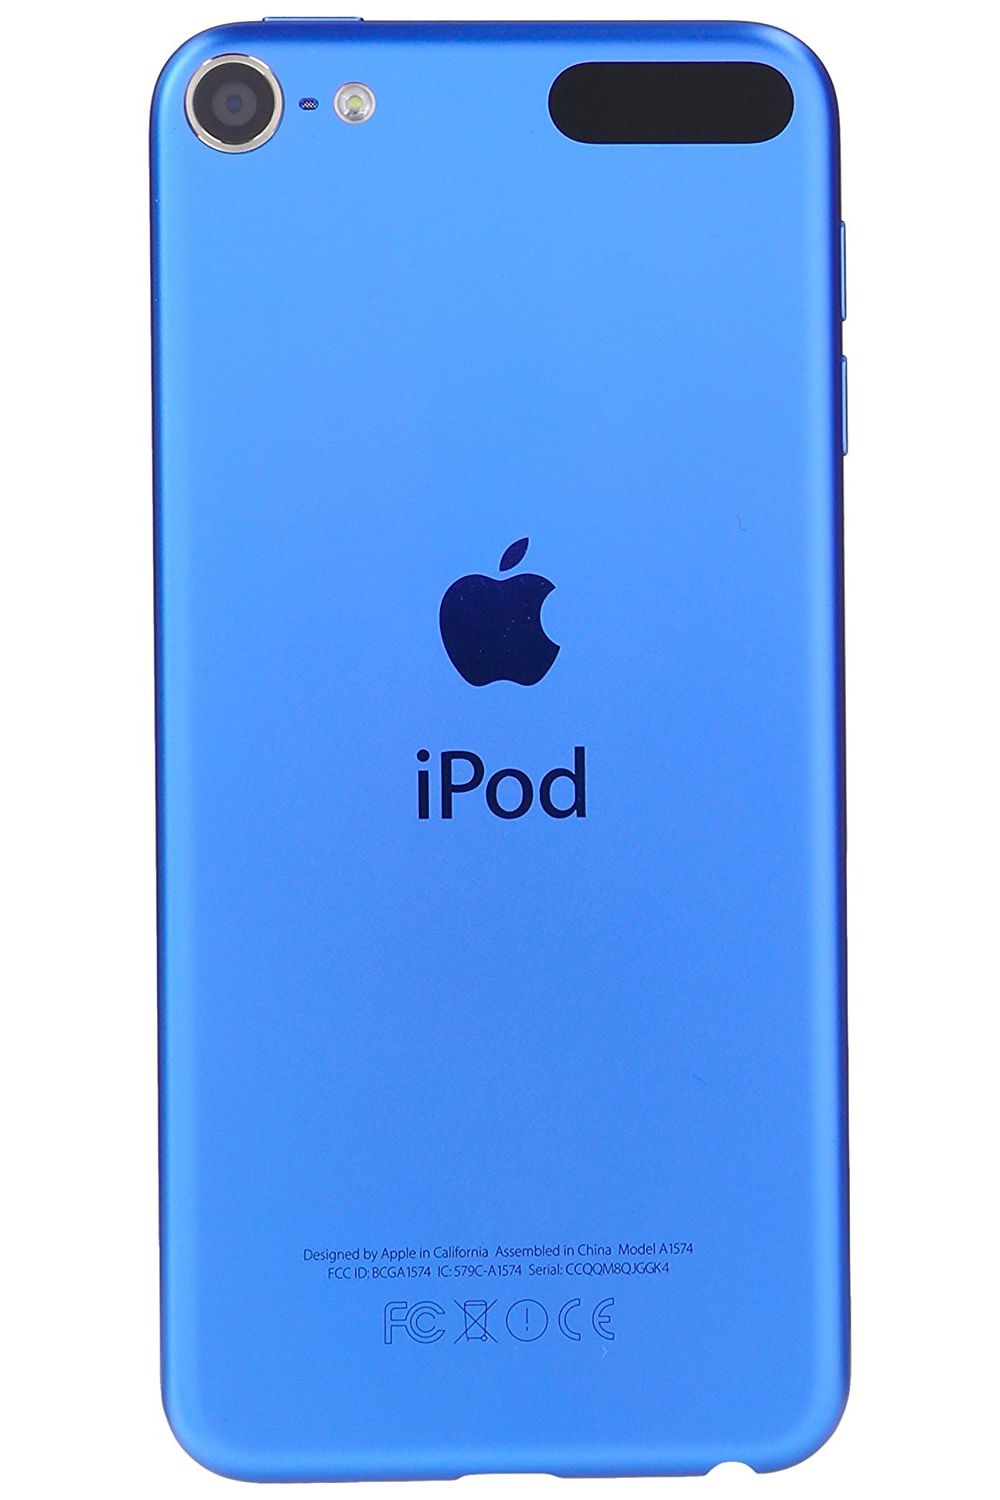 Apple iPod Touch 6th Generation 32GB - Silver (MKHX2LL/A) | eBay